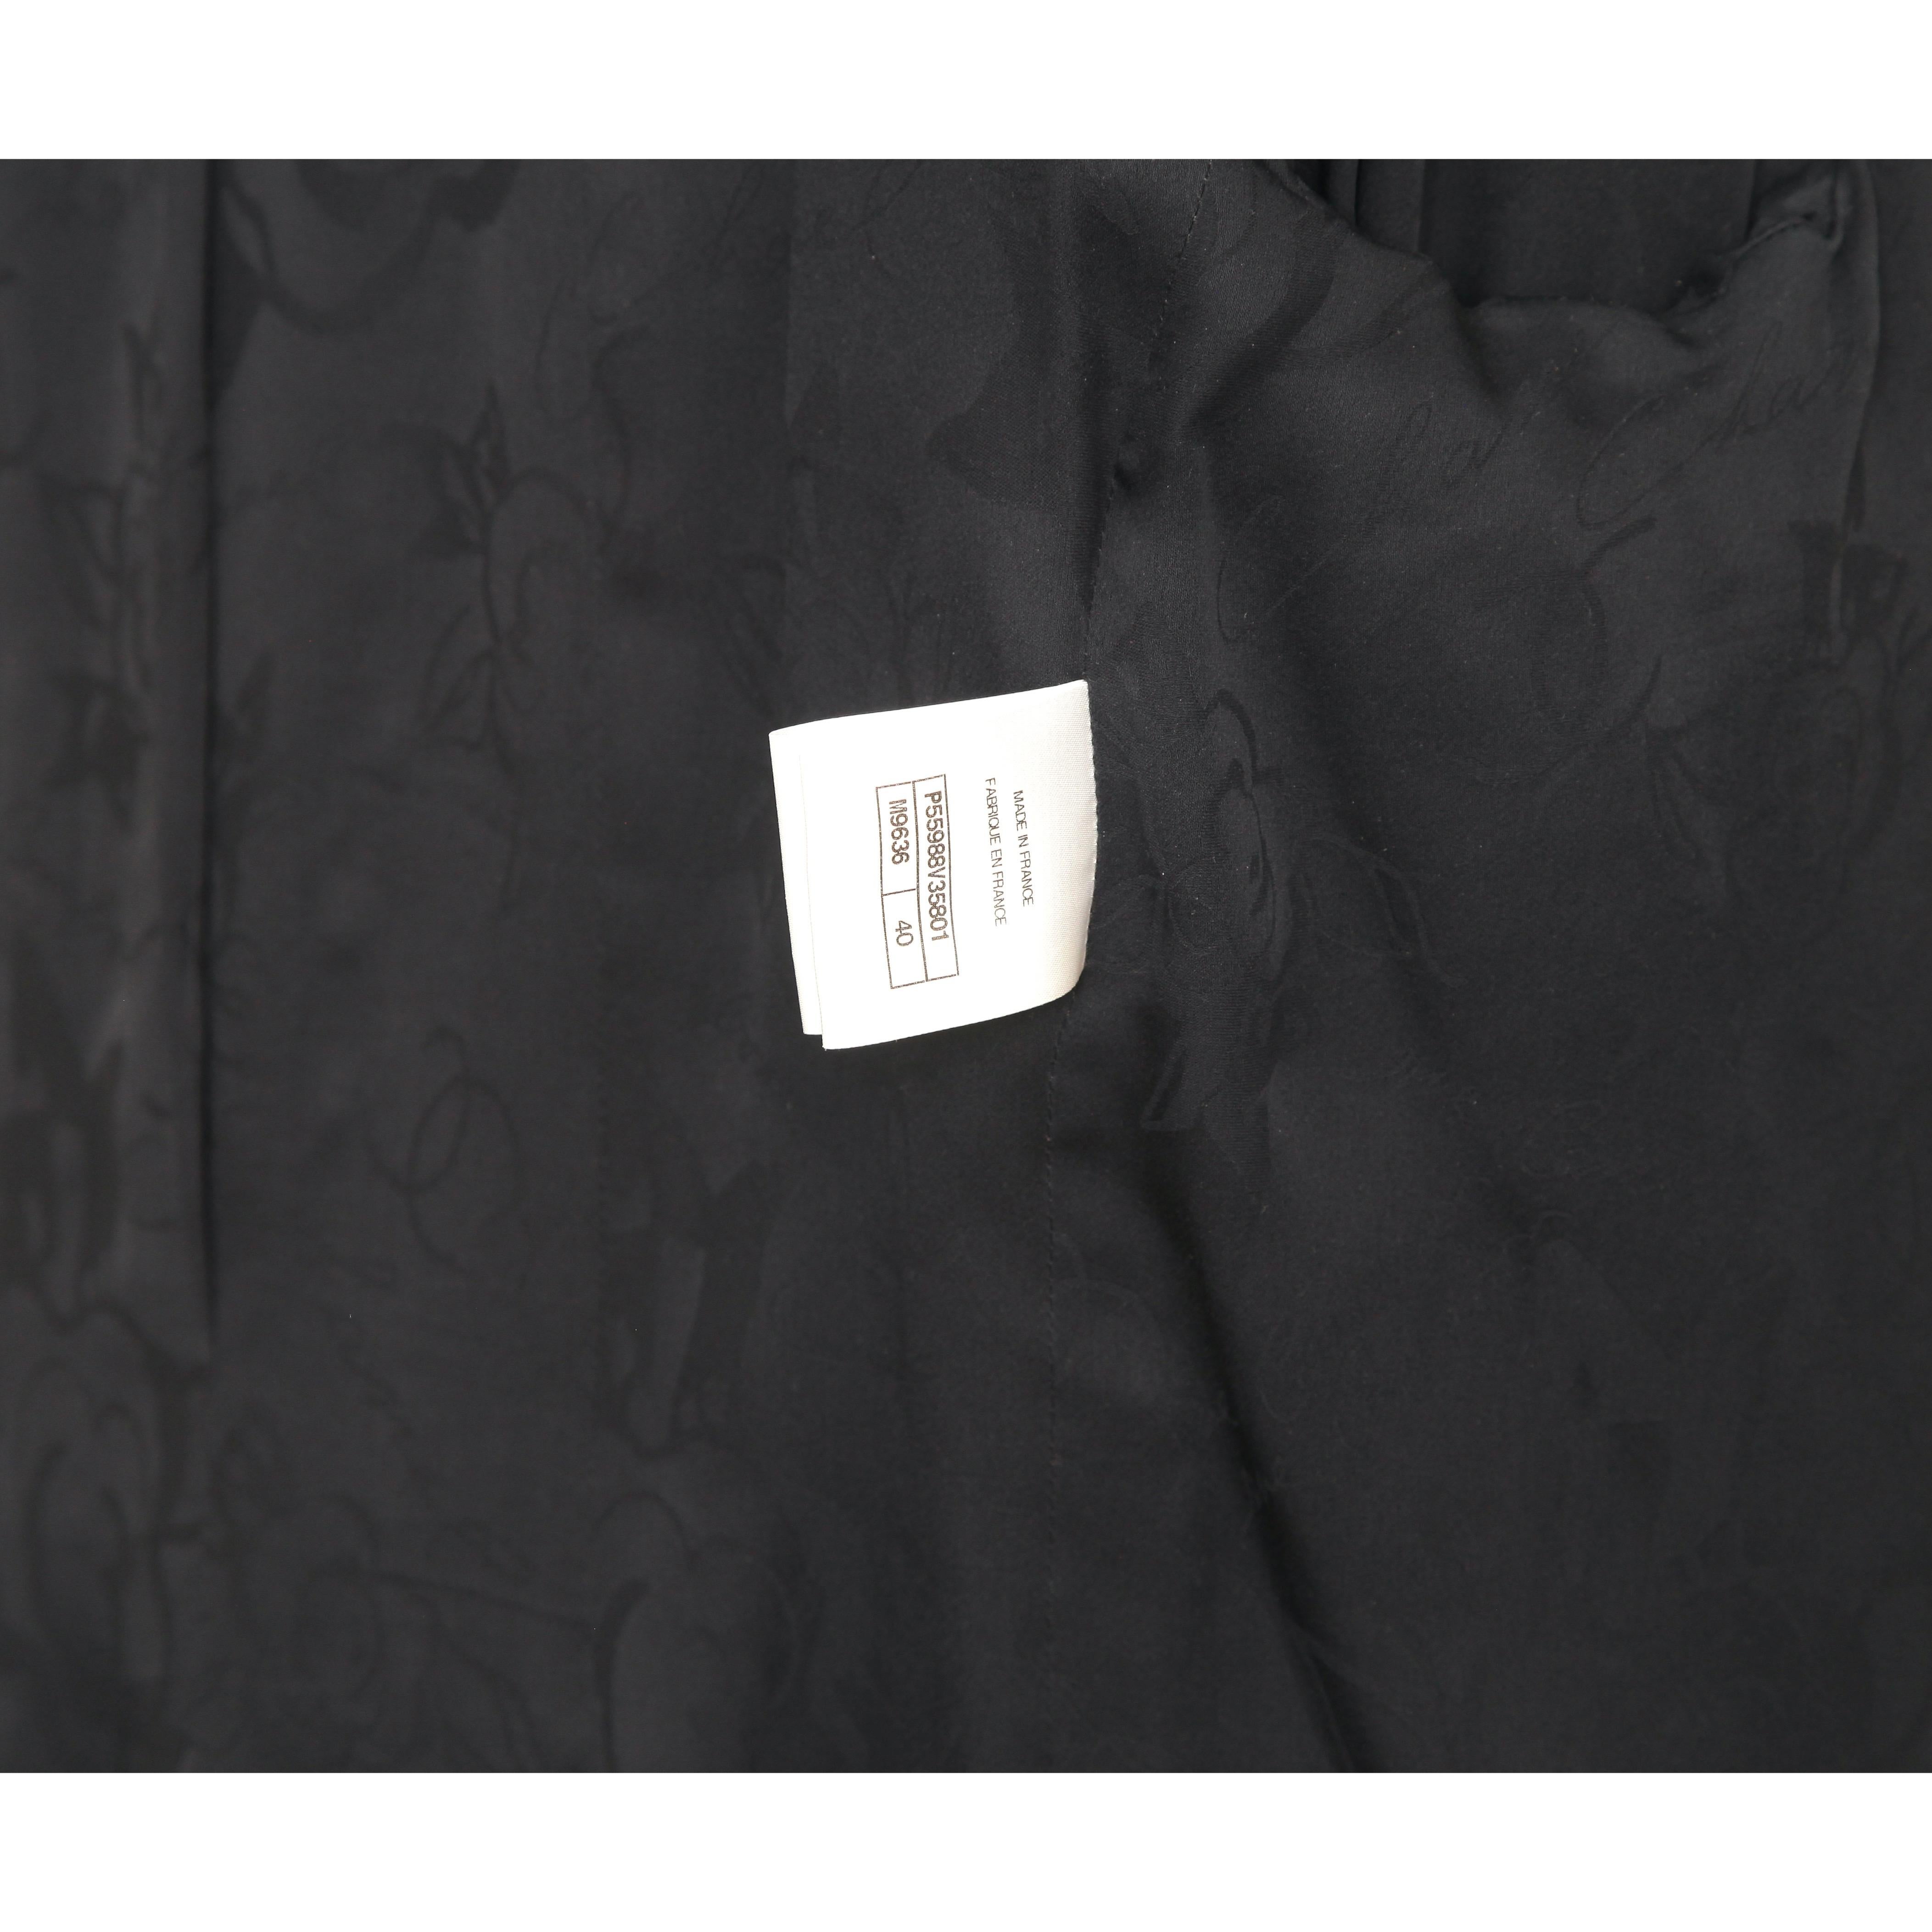 CHANEL Jacket Blazer Coat Tweed Navy Blue Beaded Buttons Zipper 2017 Sz 40 For Sale 6